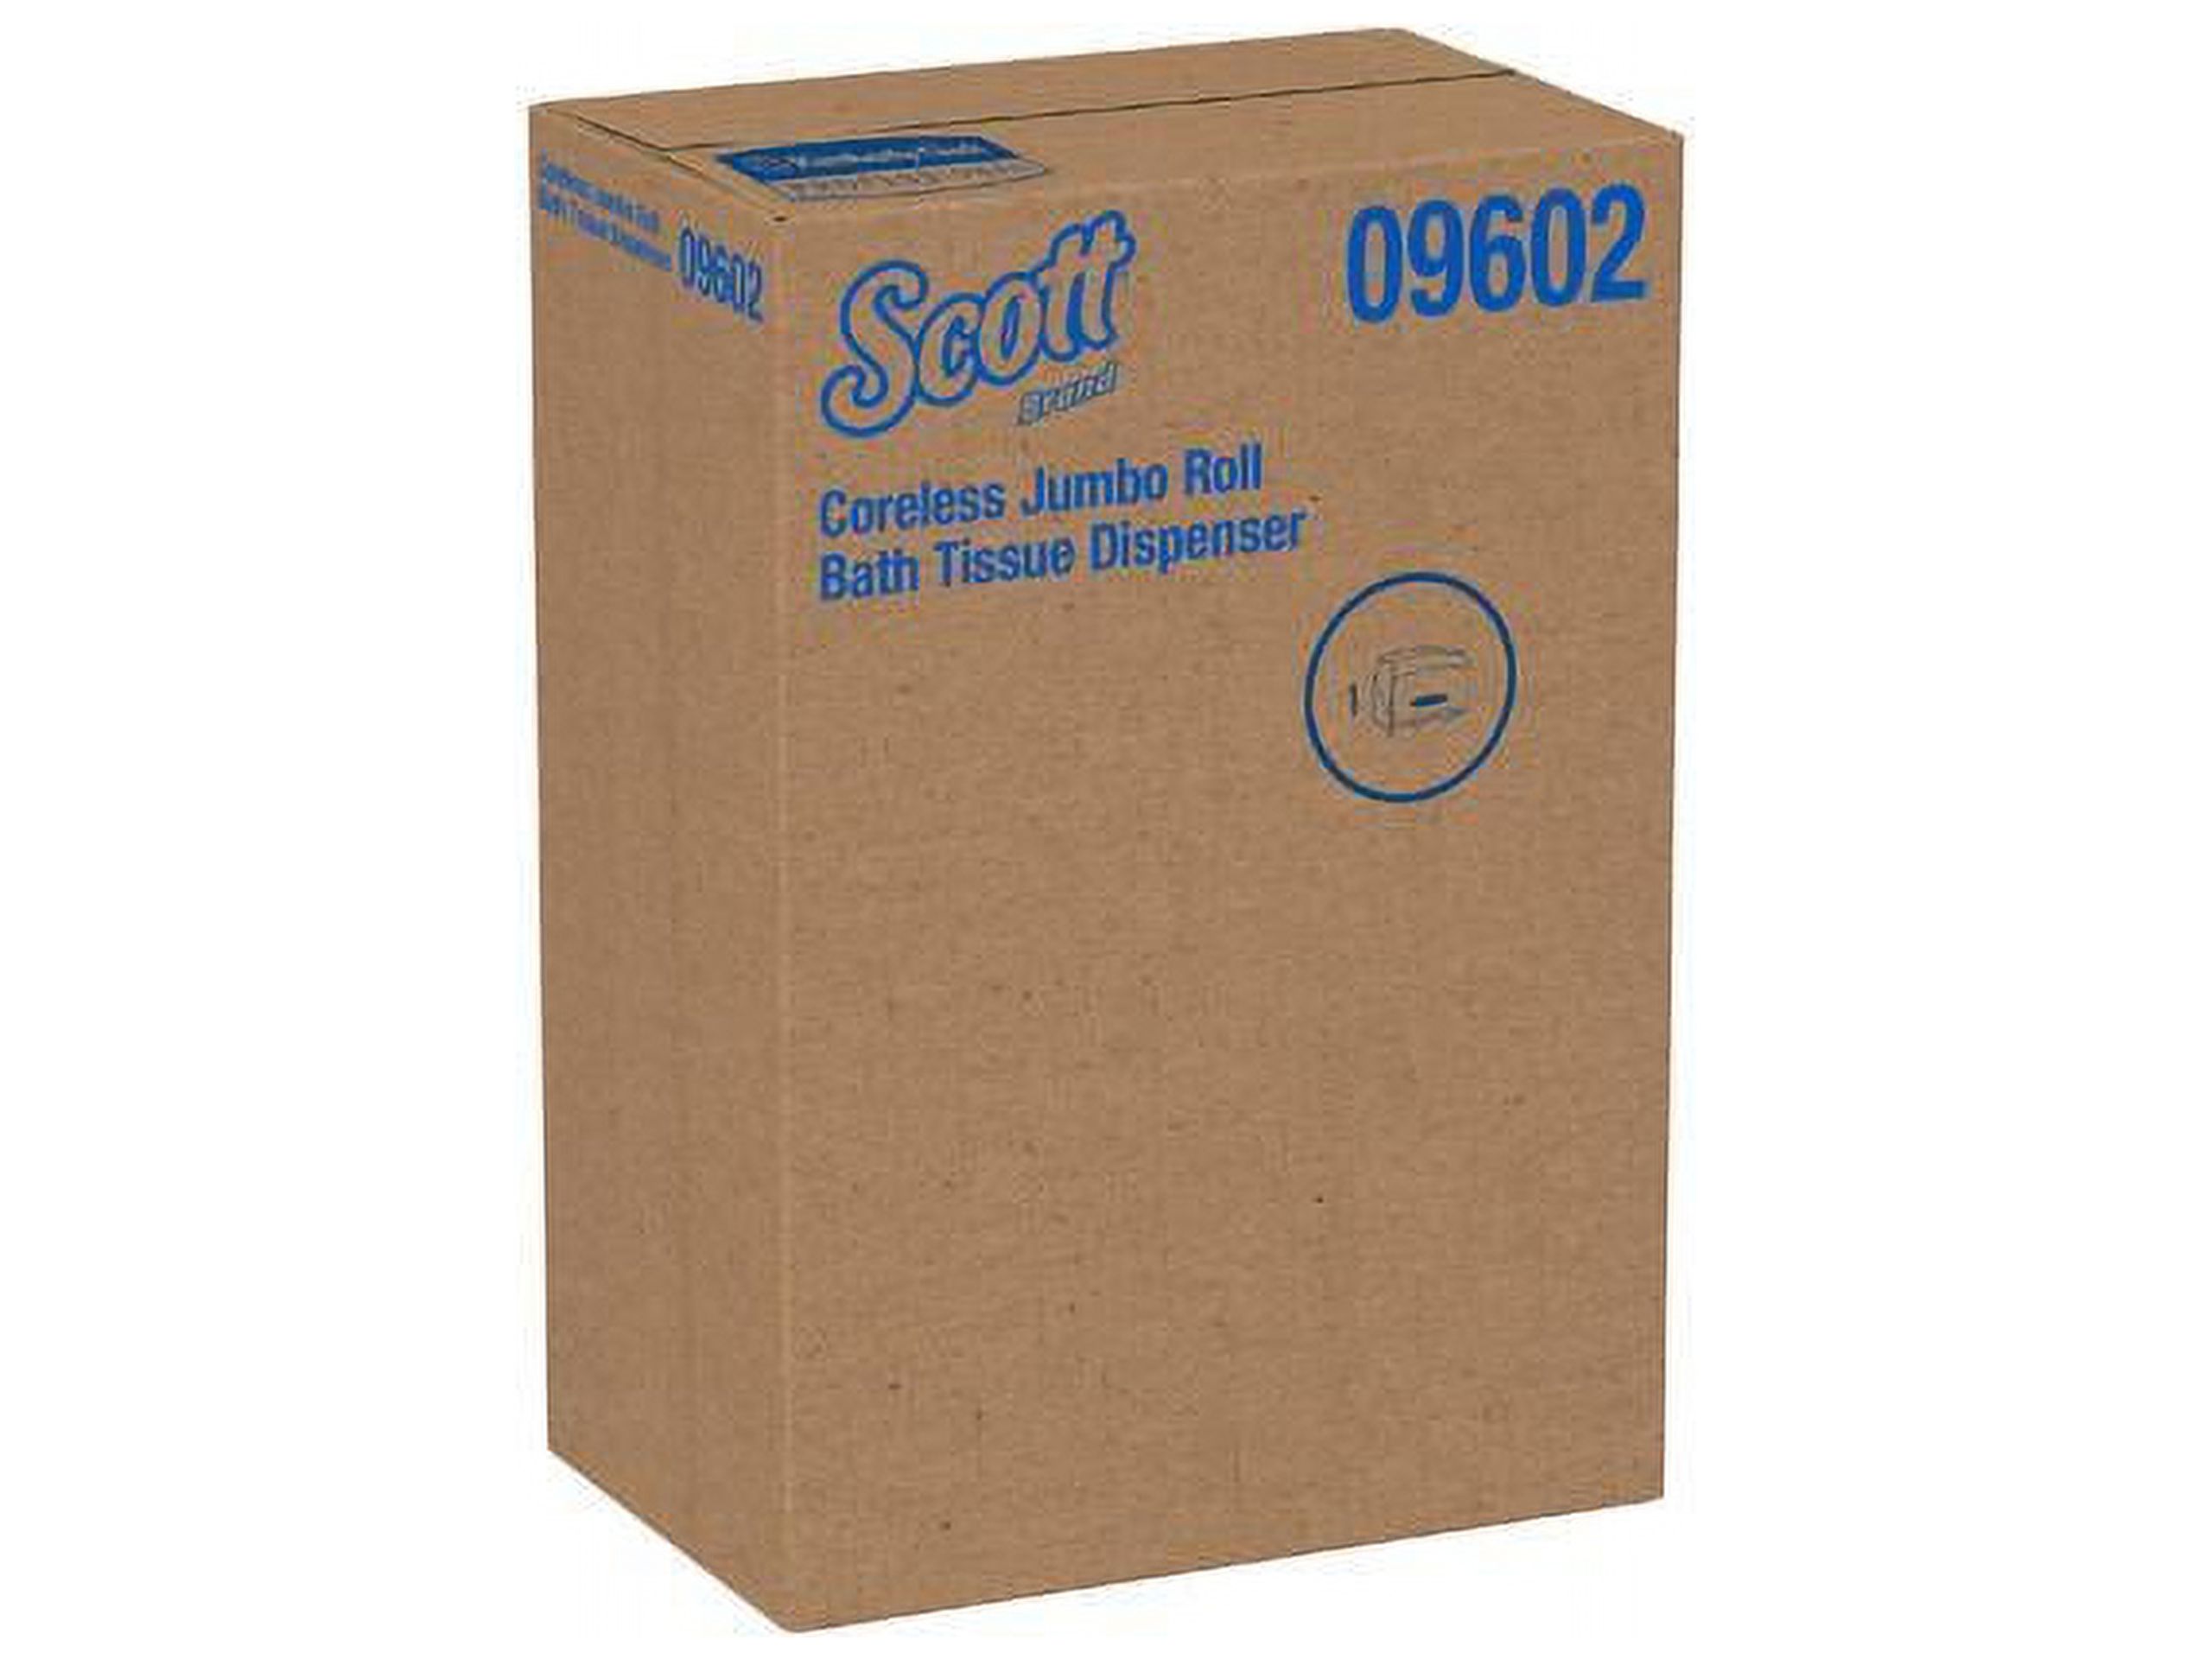 Scott Essential Coreless Jumbo Roll Tissue Dispenser, 14.25 x 6 x 9.7, Black -KCC09602 - image 4 of 5